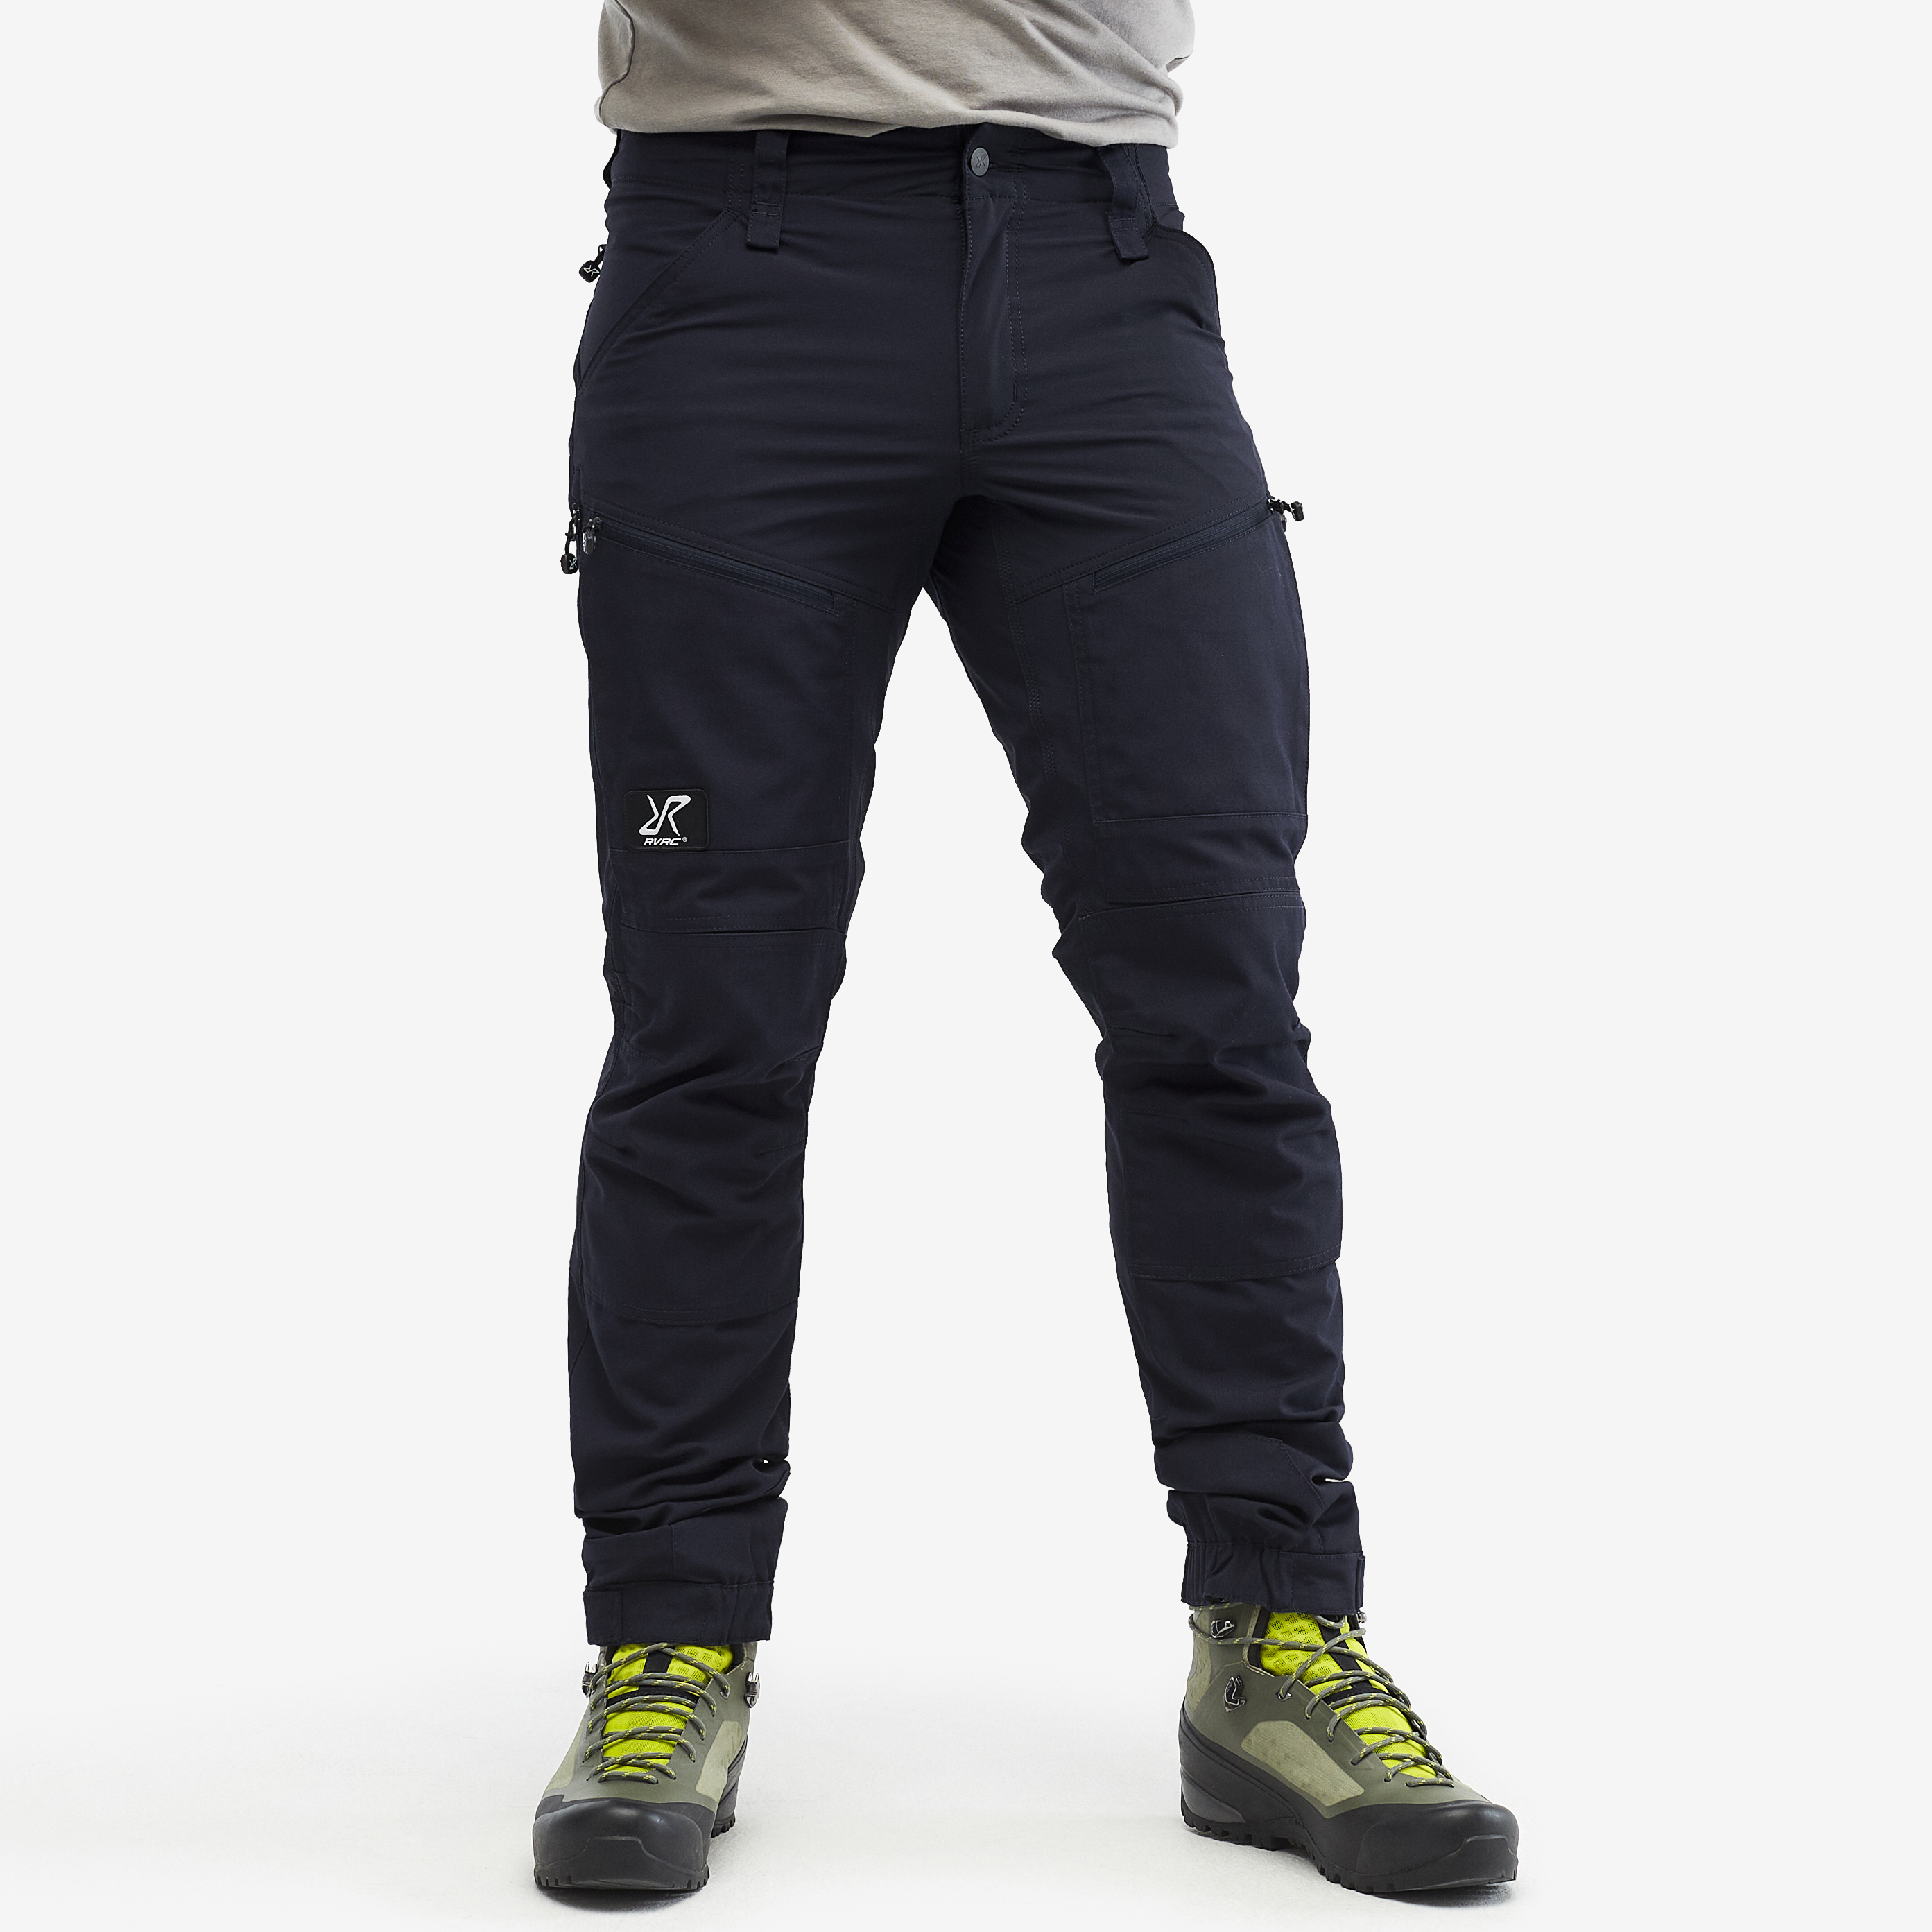 RVRC GP Pro hiking trousers for men in dark blue